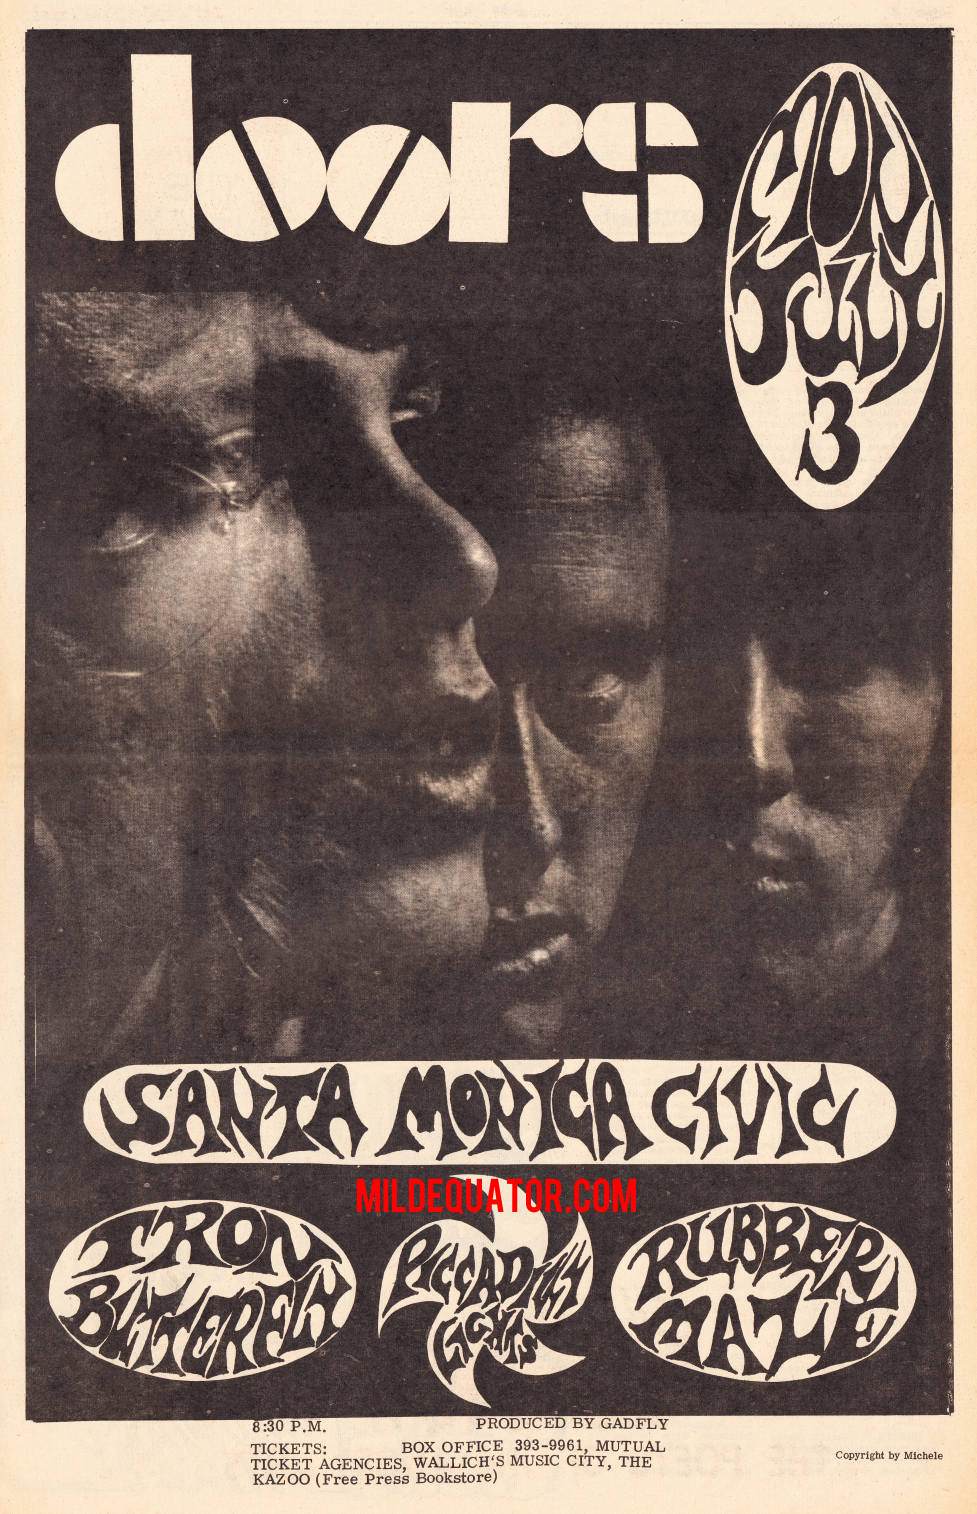 The Doors - Santa Monica 1967 - Poster Ad